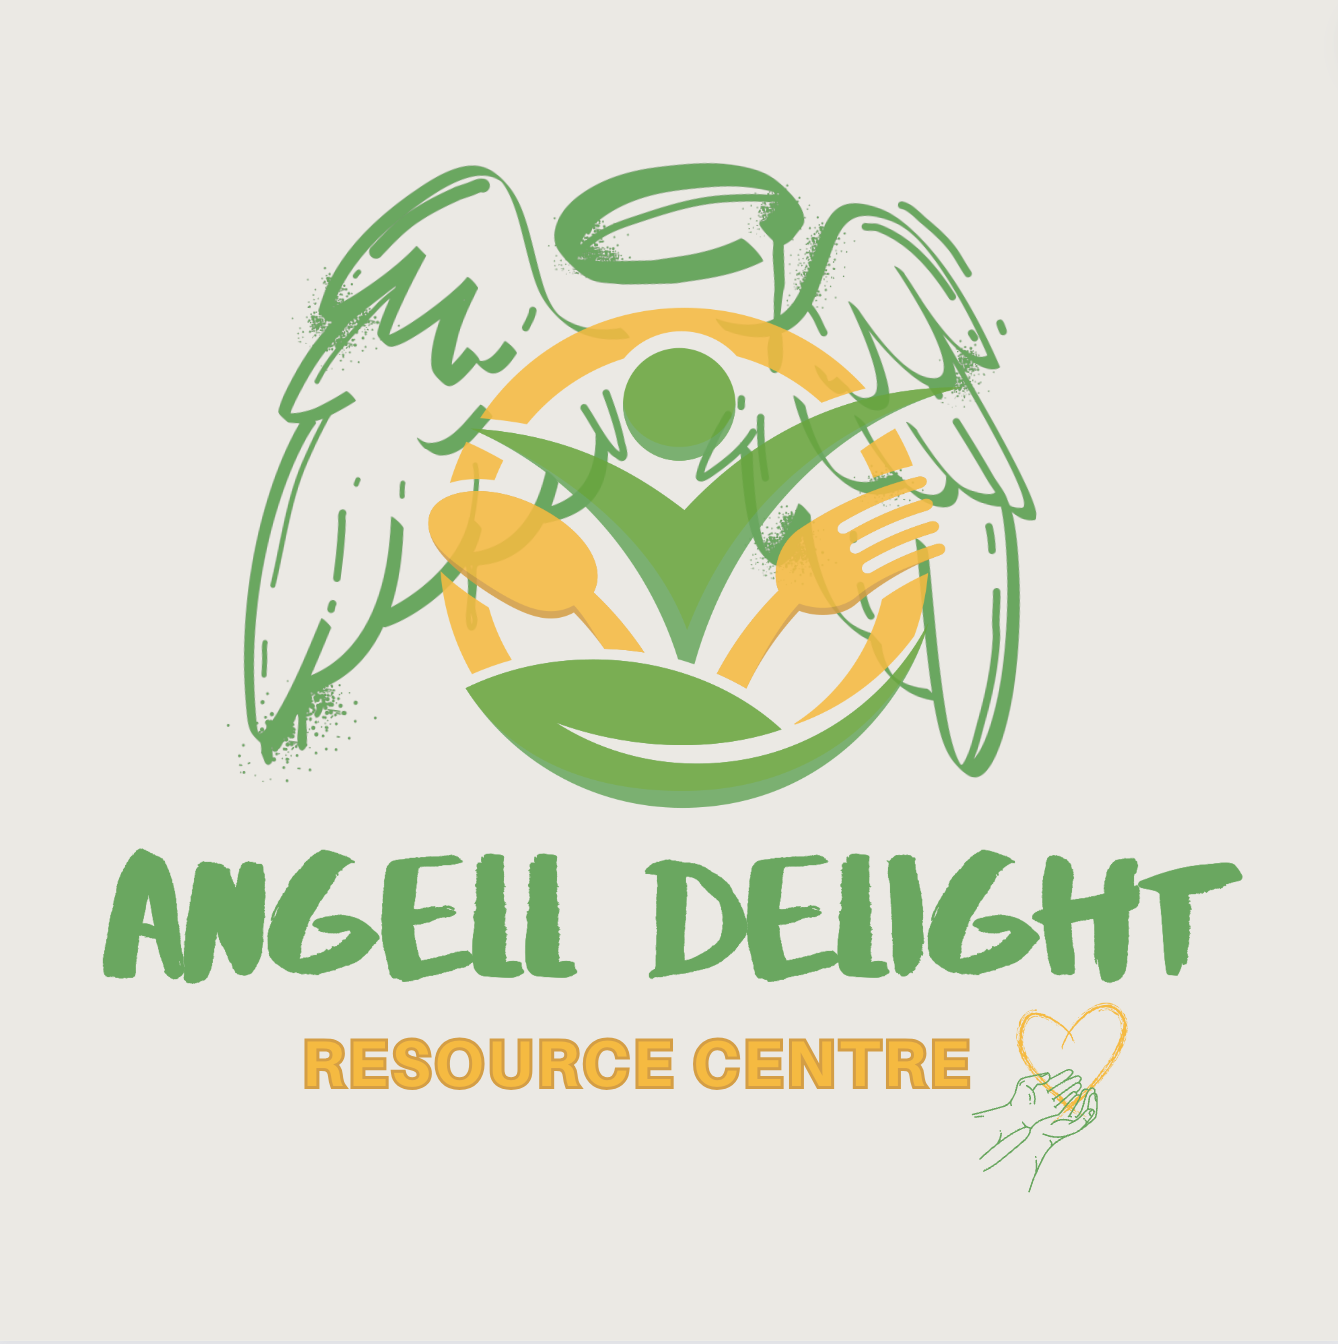 Angell Delight